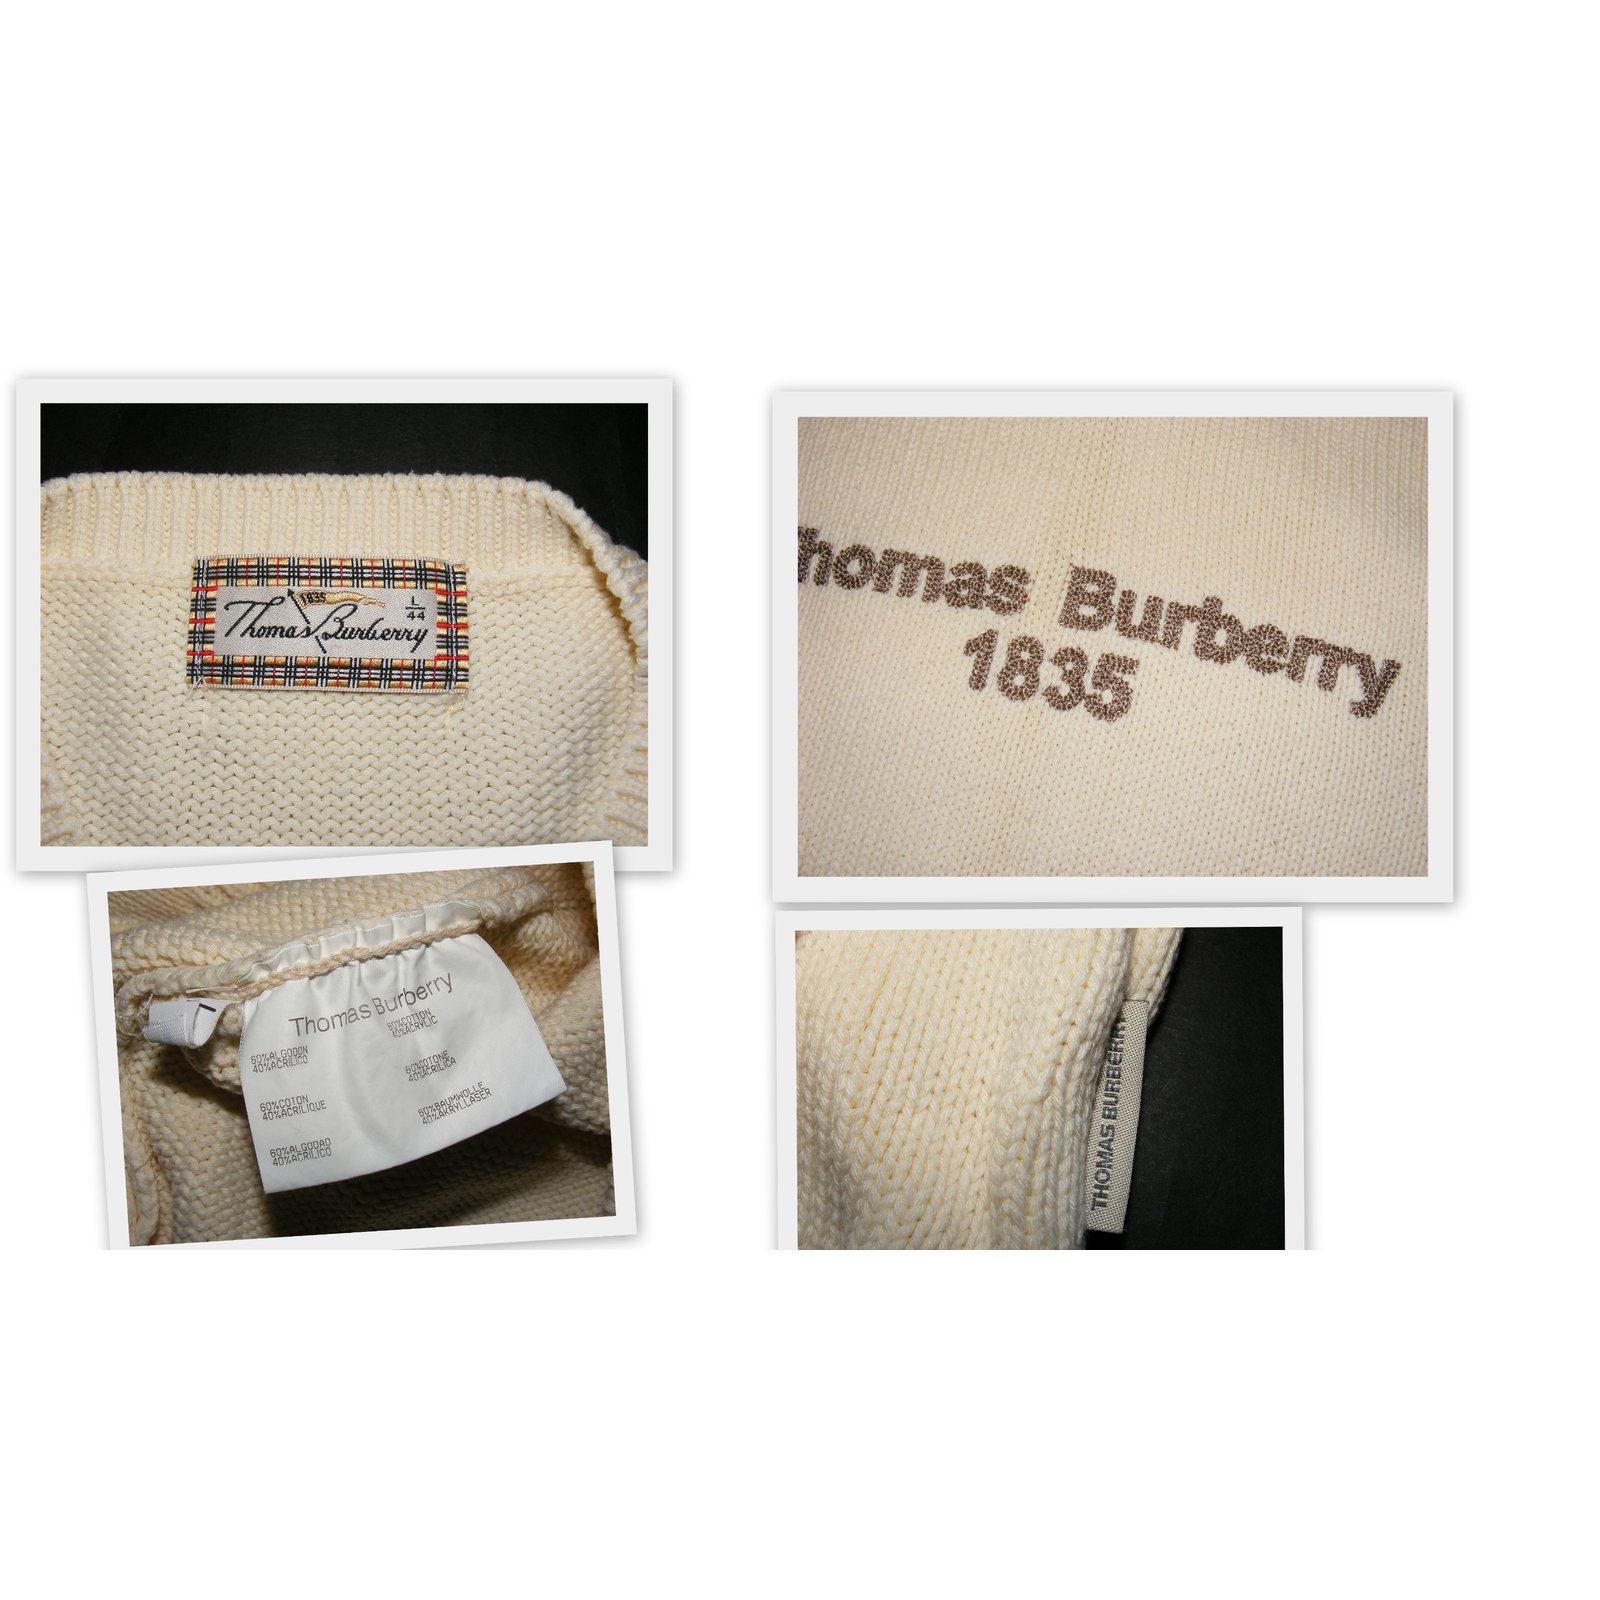 thomas burberry 1835